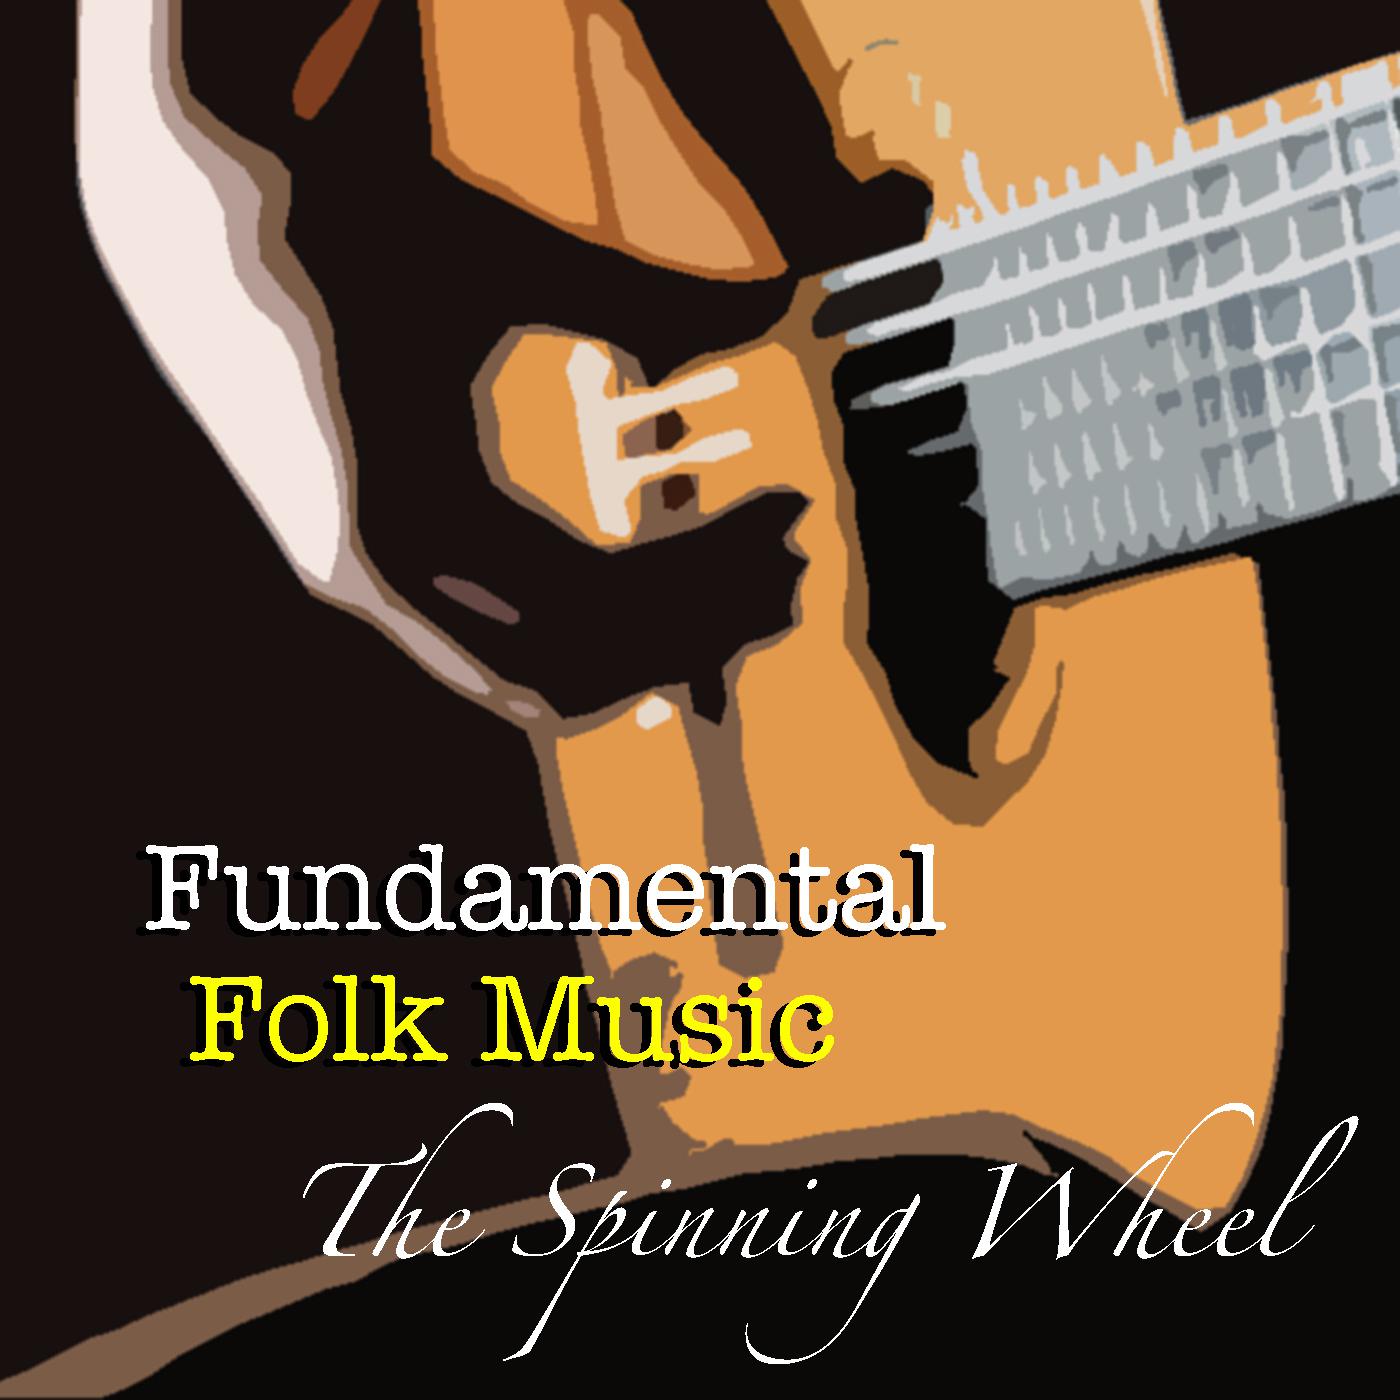 The Spinning Wheel Fundamental Folk Music